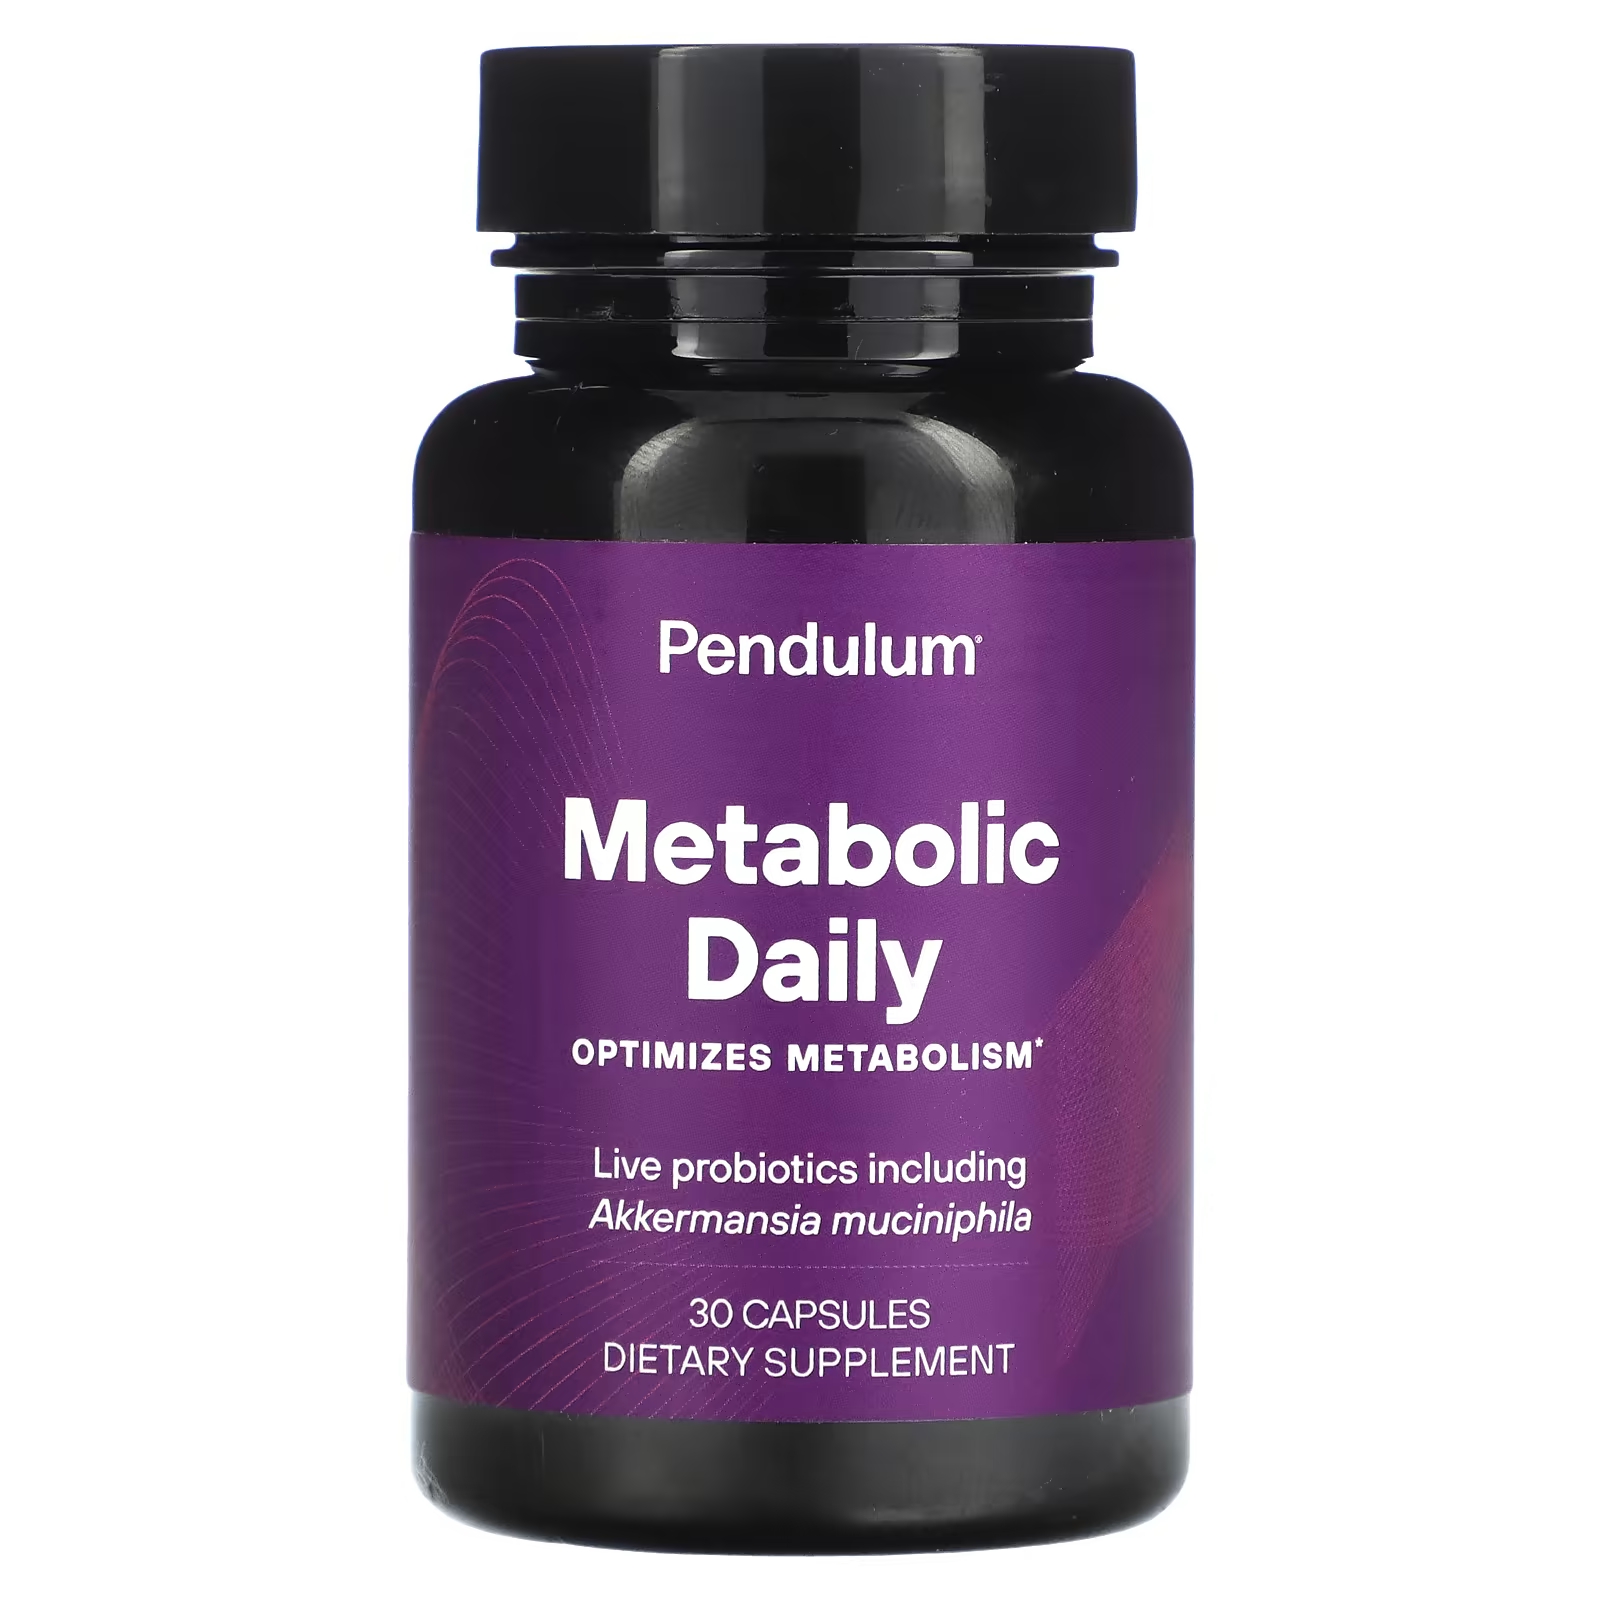 Пищевая добавка Pendulum Metabolic Daily с аккермансией, 30 капсул